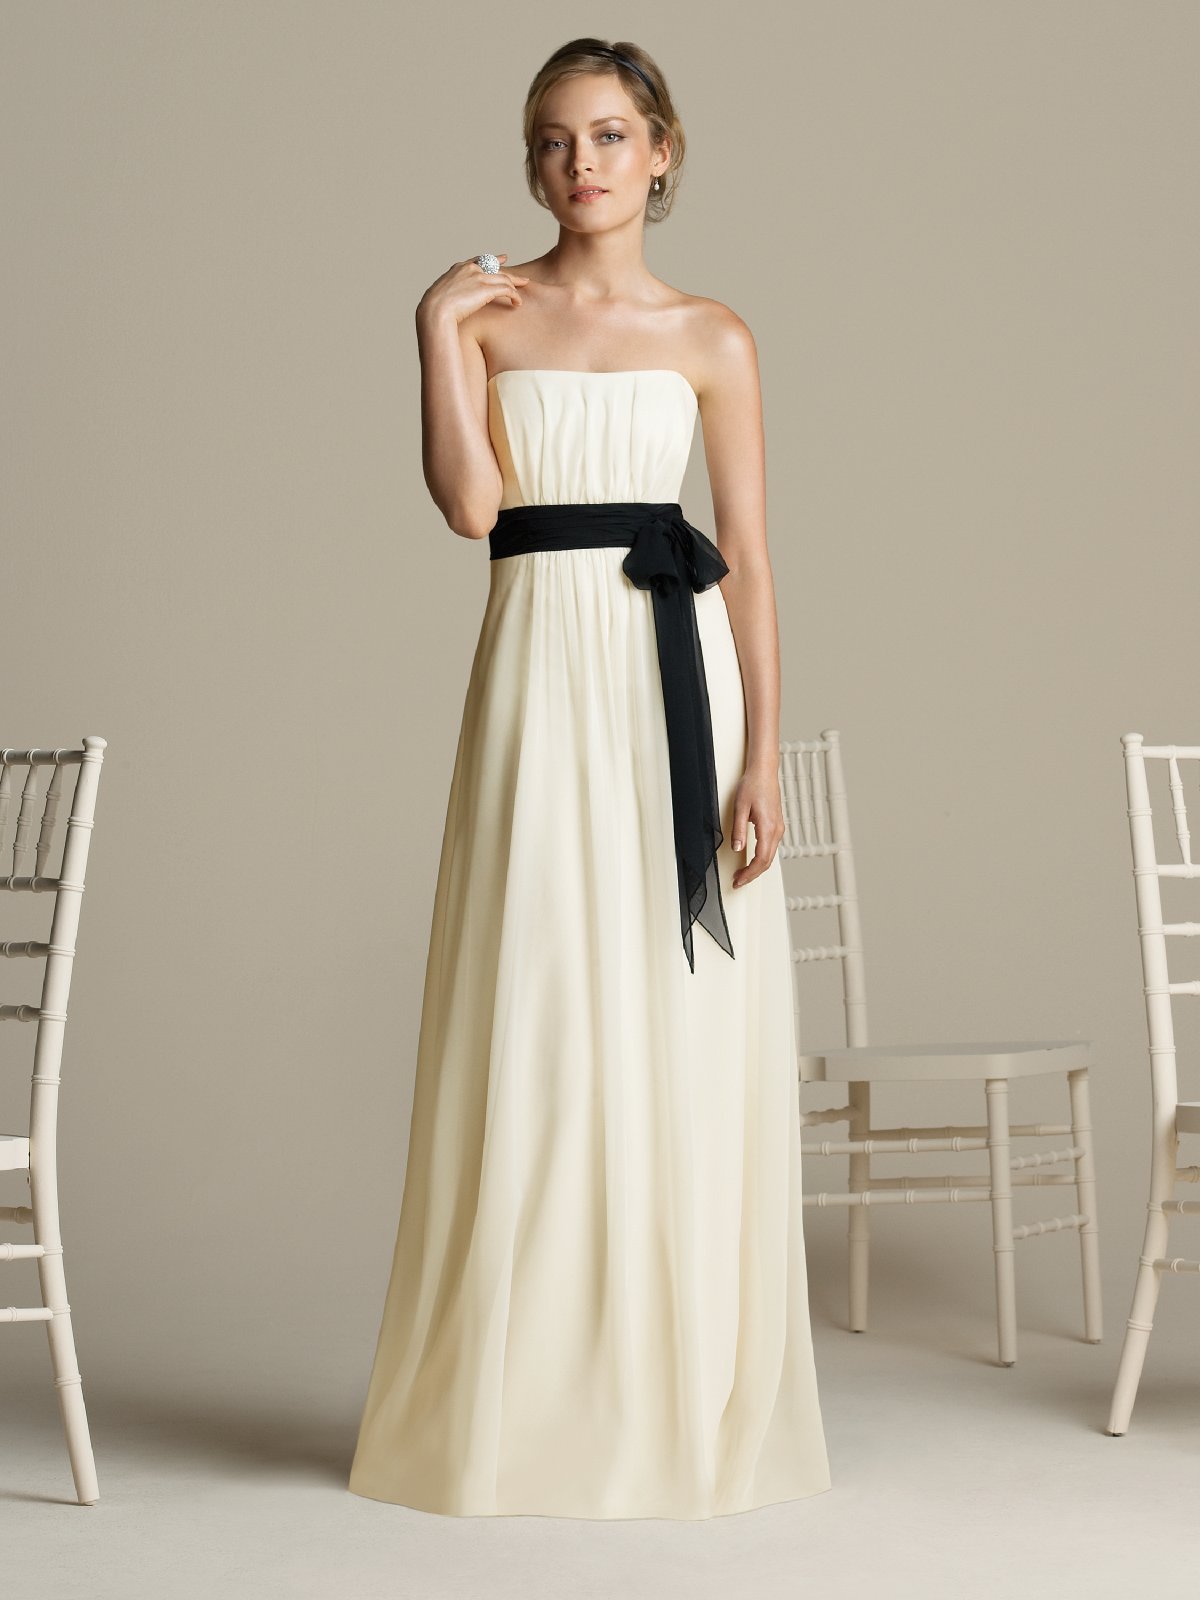 Ivory Empire Strapless Zipper Floor Length Draped Chiffon Prom Dresses With Black Sash 